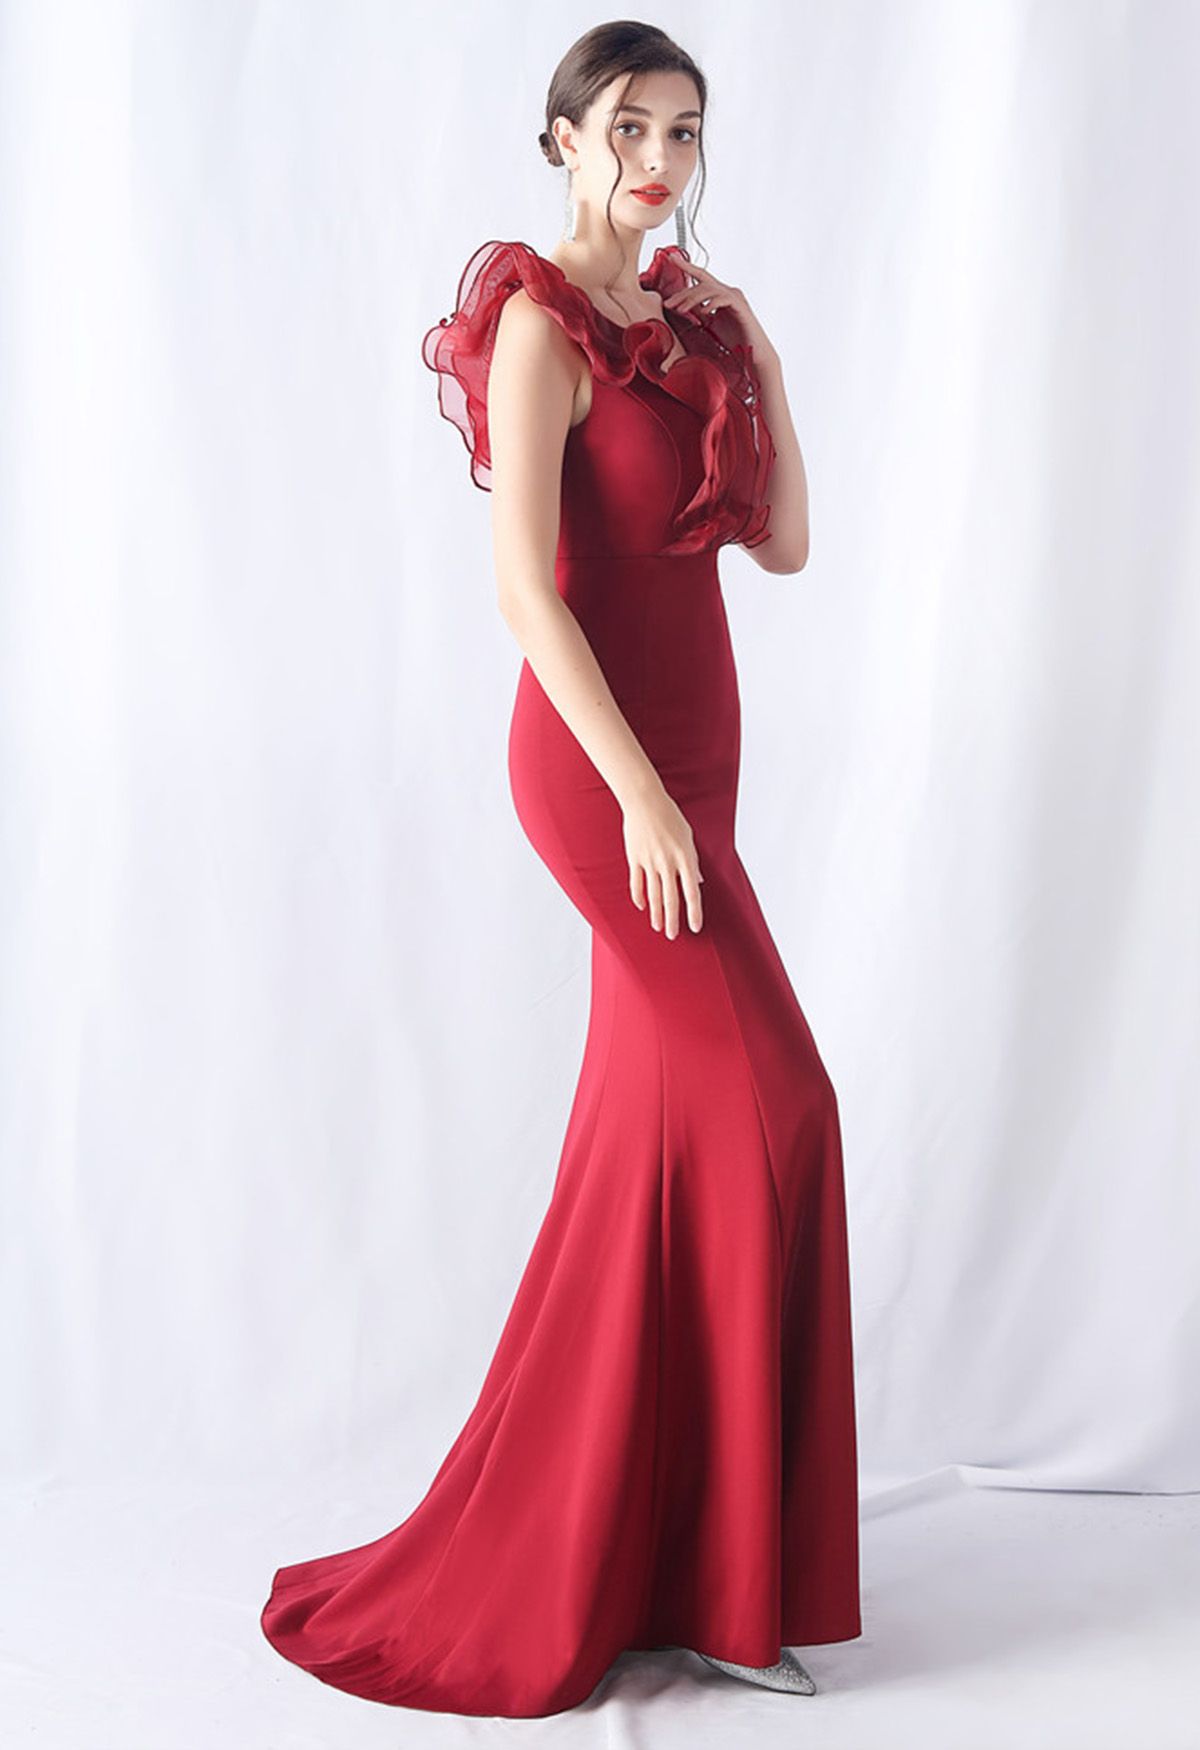 Organza Ruffle Trim Satin Slit Mermaid Gown in Red